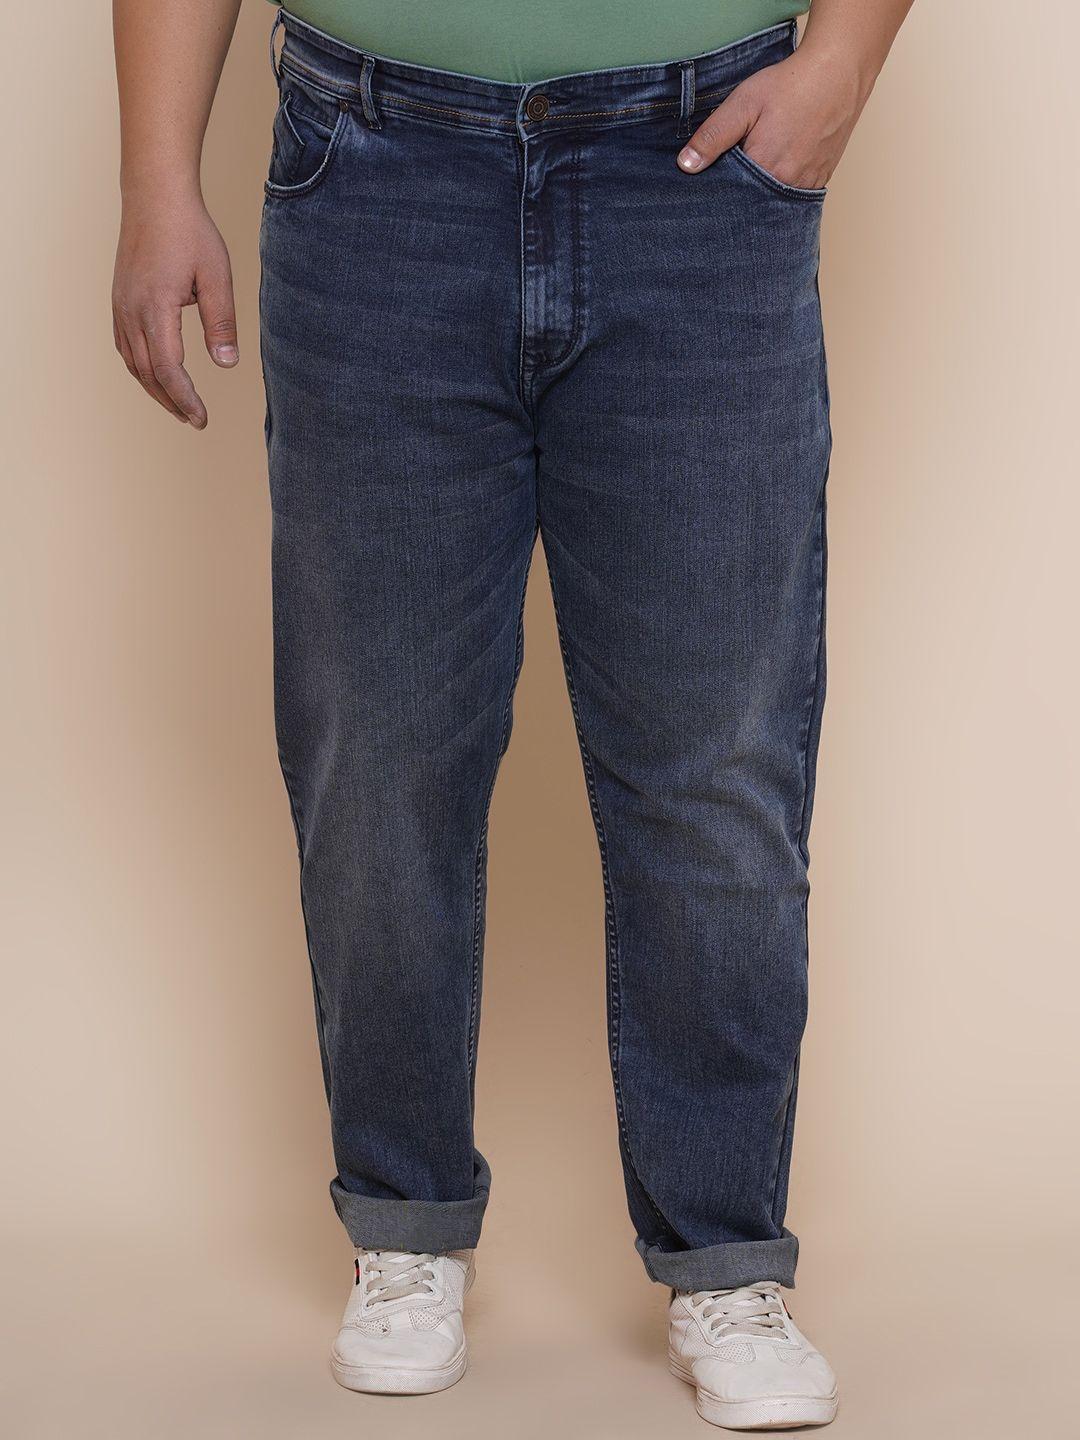 john-pride-men-plus-size-cotton-light-fade-stretchable-jeans